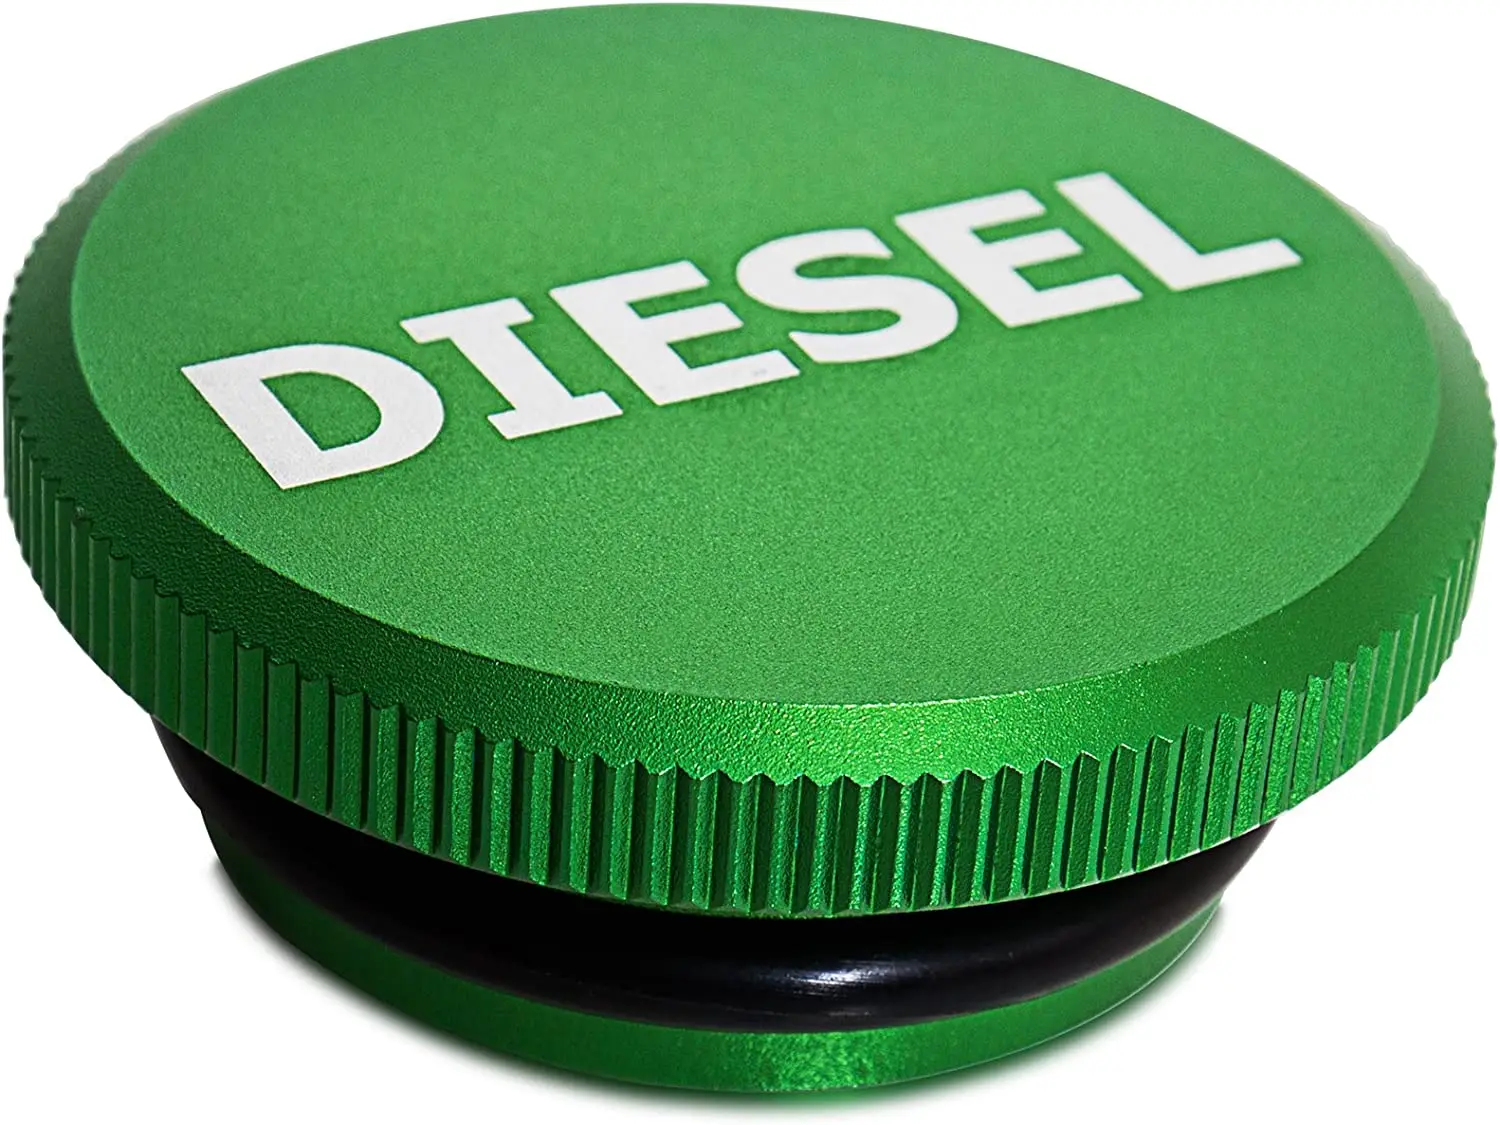 

Diesel Fuel Cap - Billet Tank Gas Cap for 13-19 Dodge Ram 1500 2500 3500 Cummins EcoDiesel Pick-up Truck Accessories